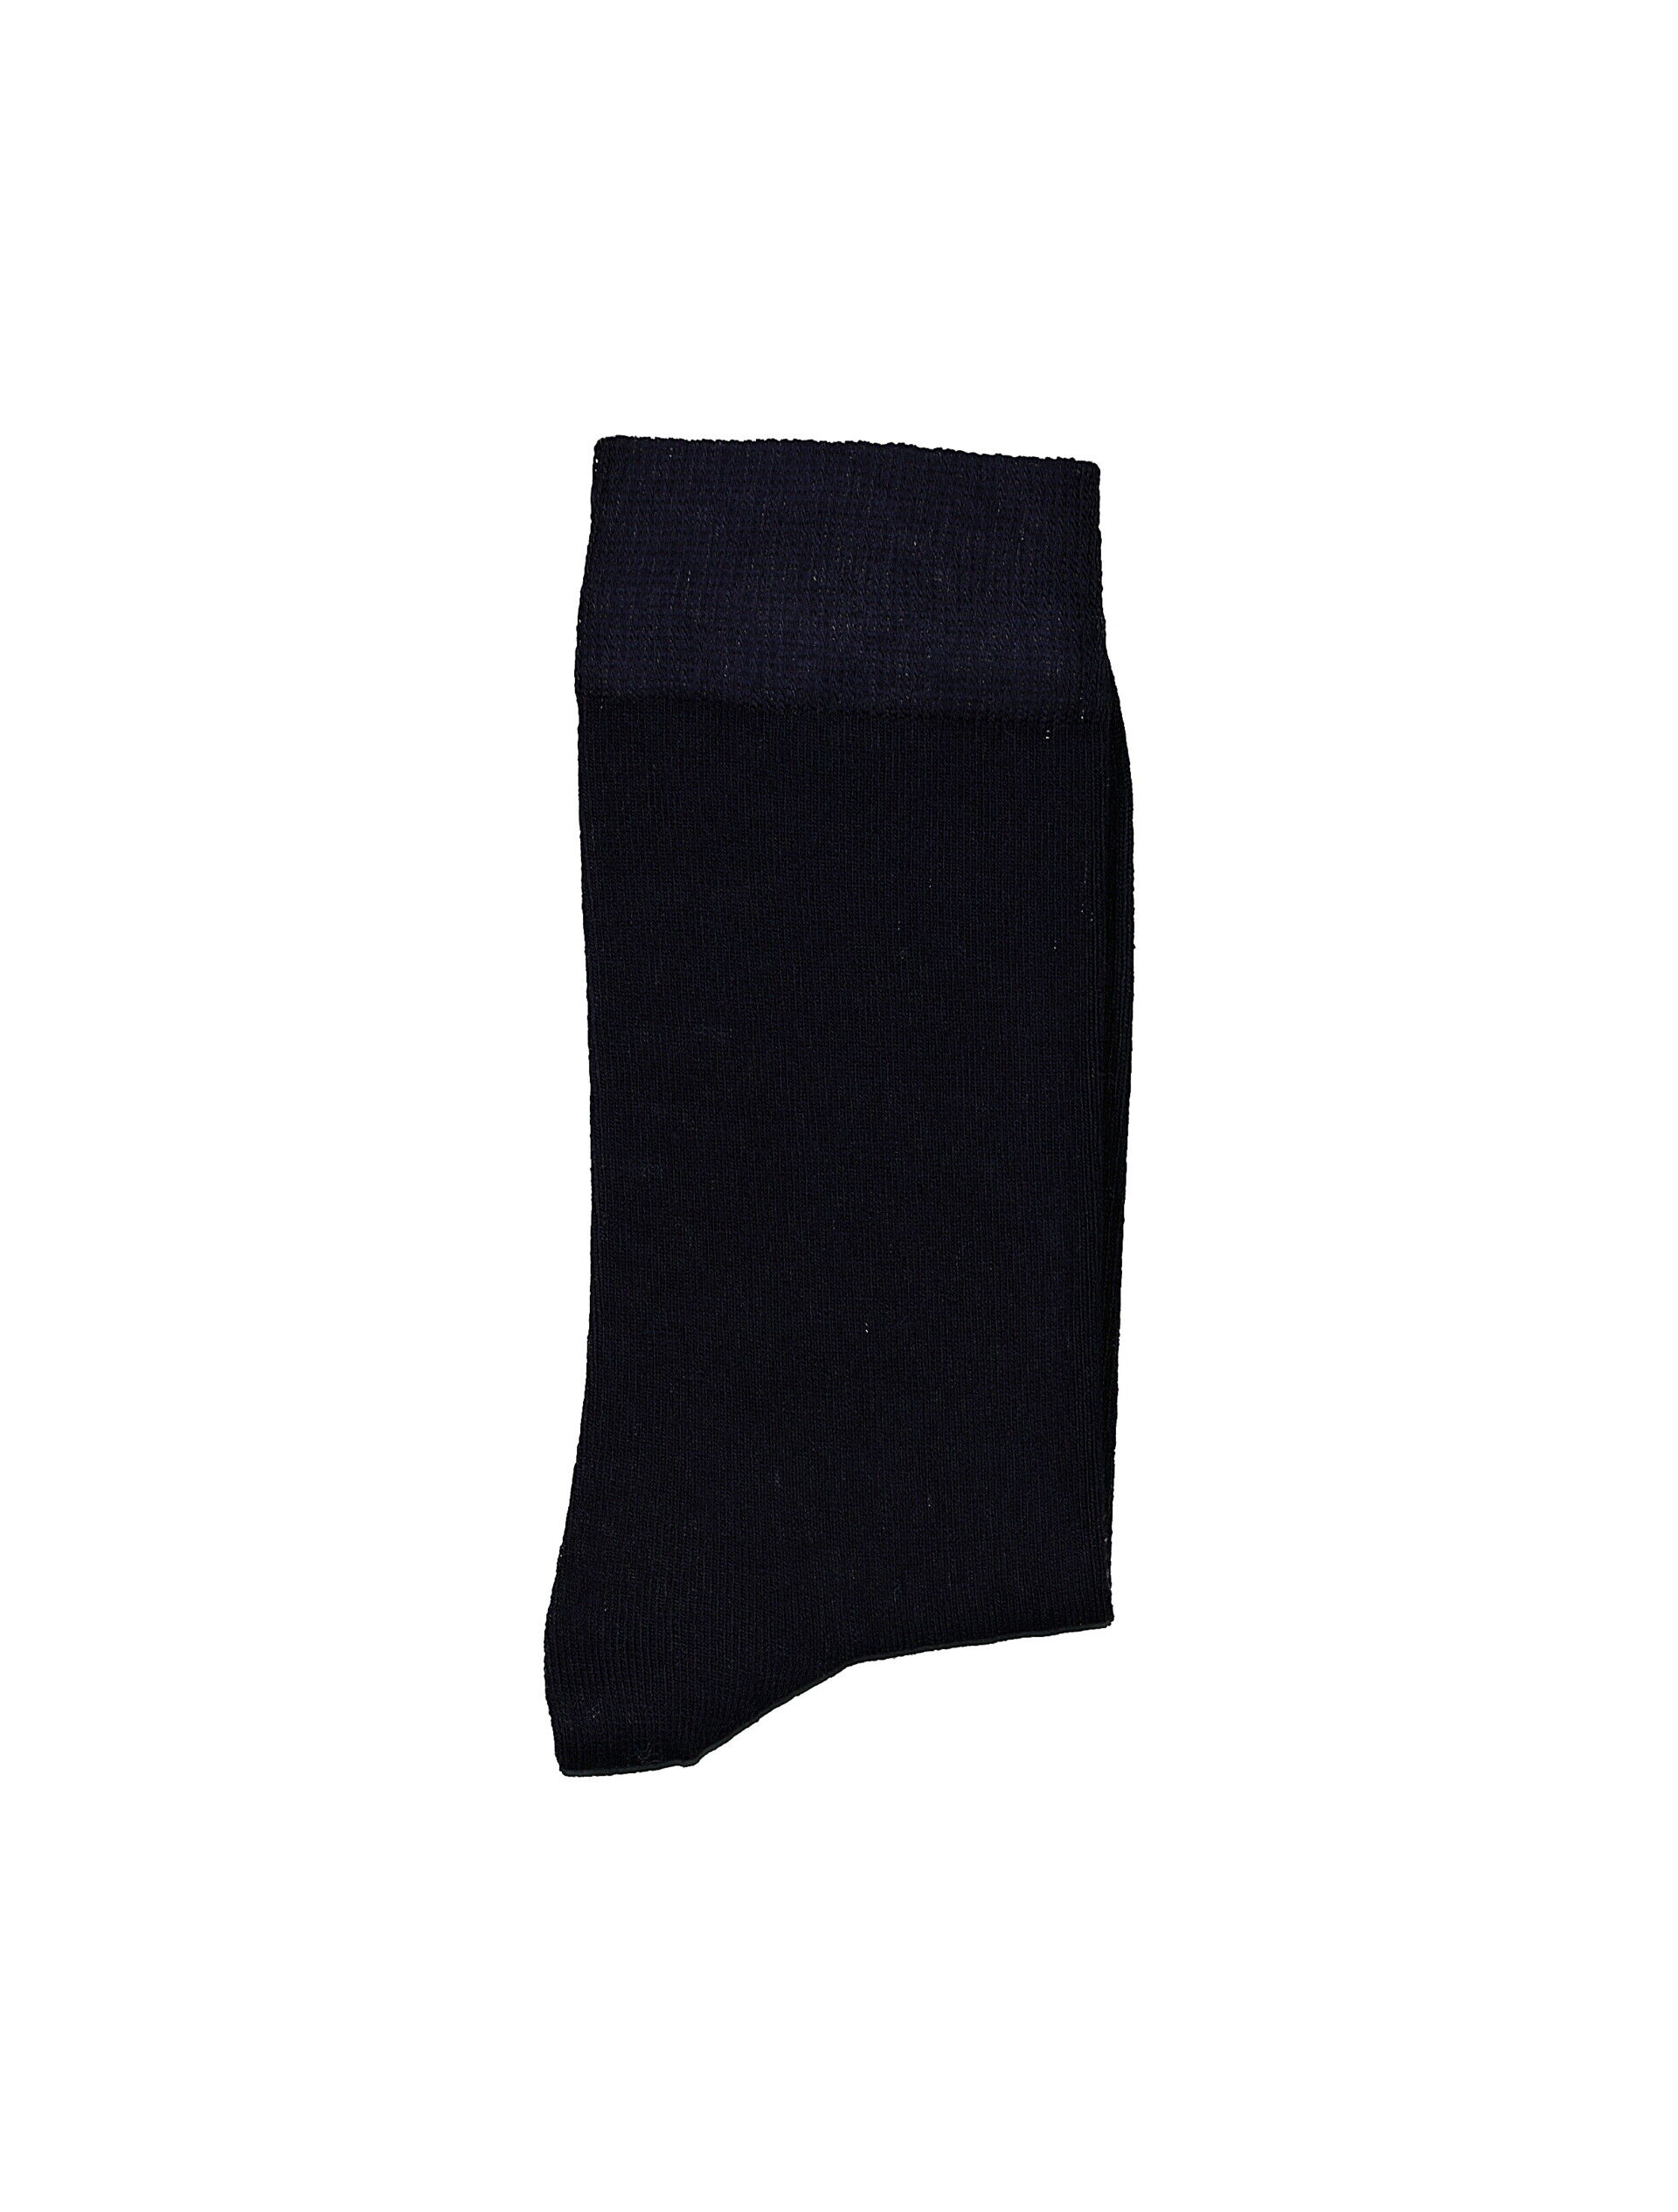 Socks 30-991049